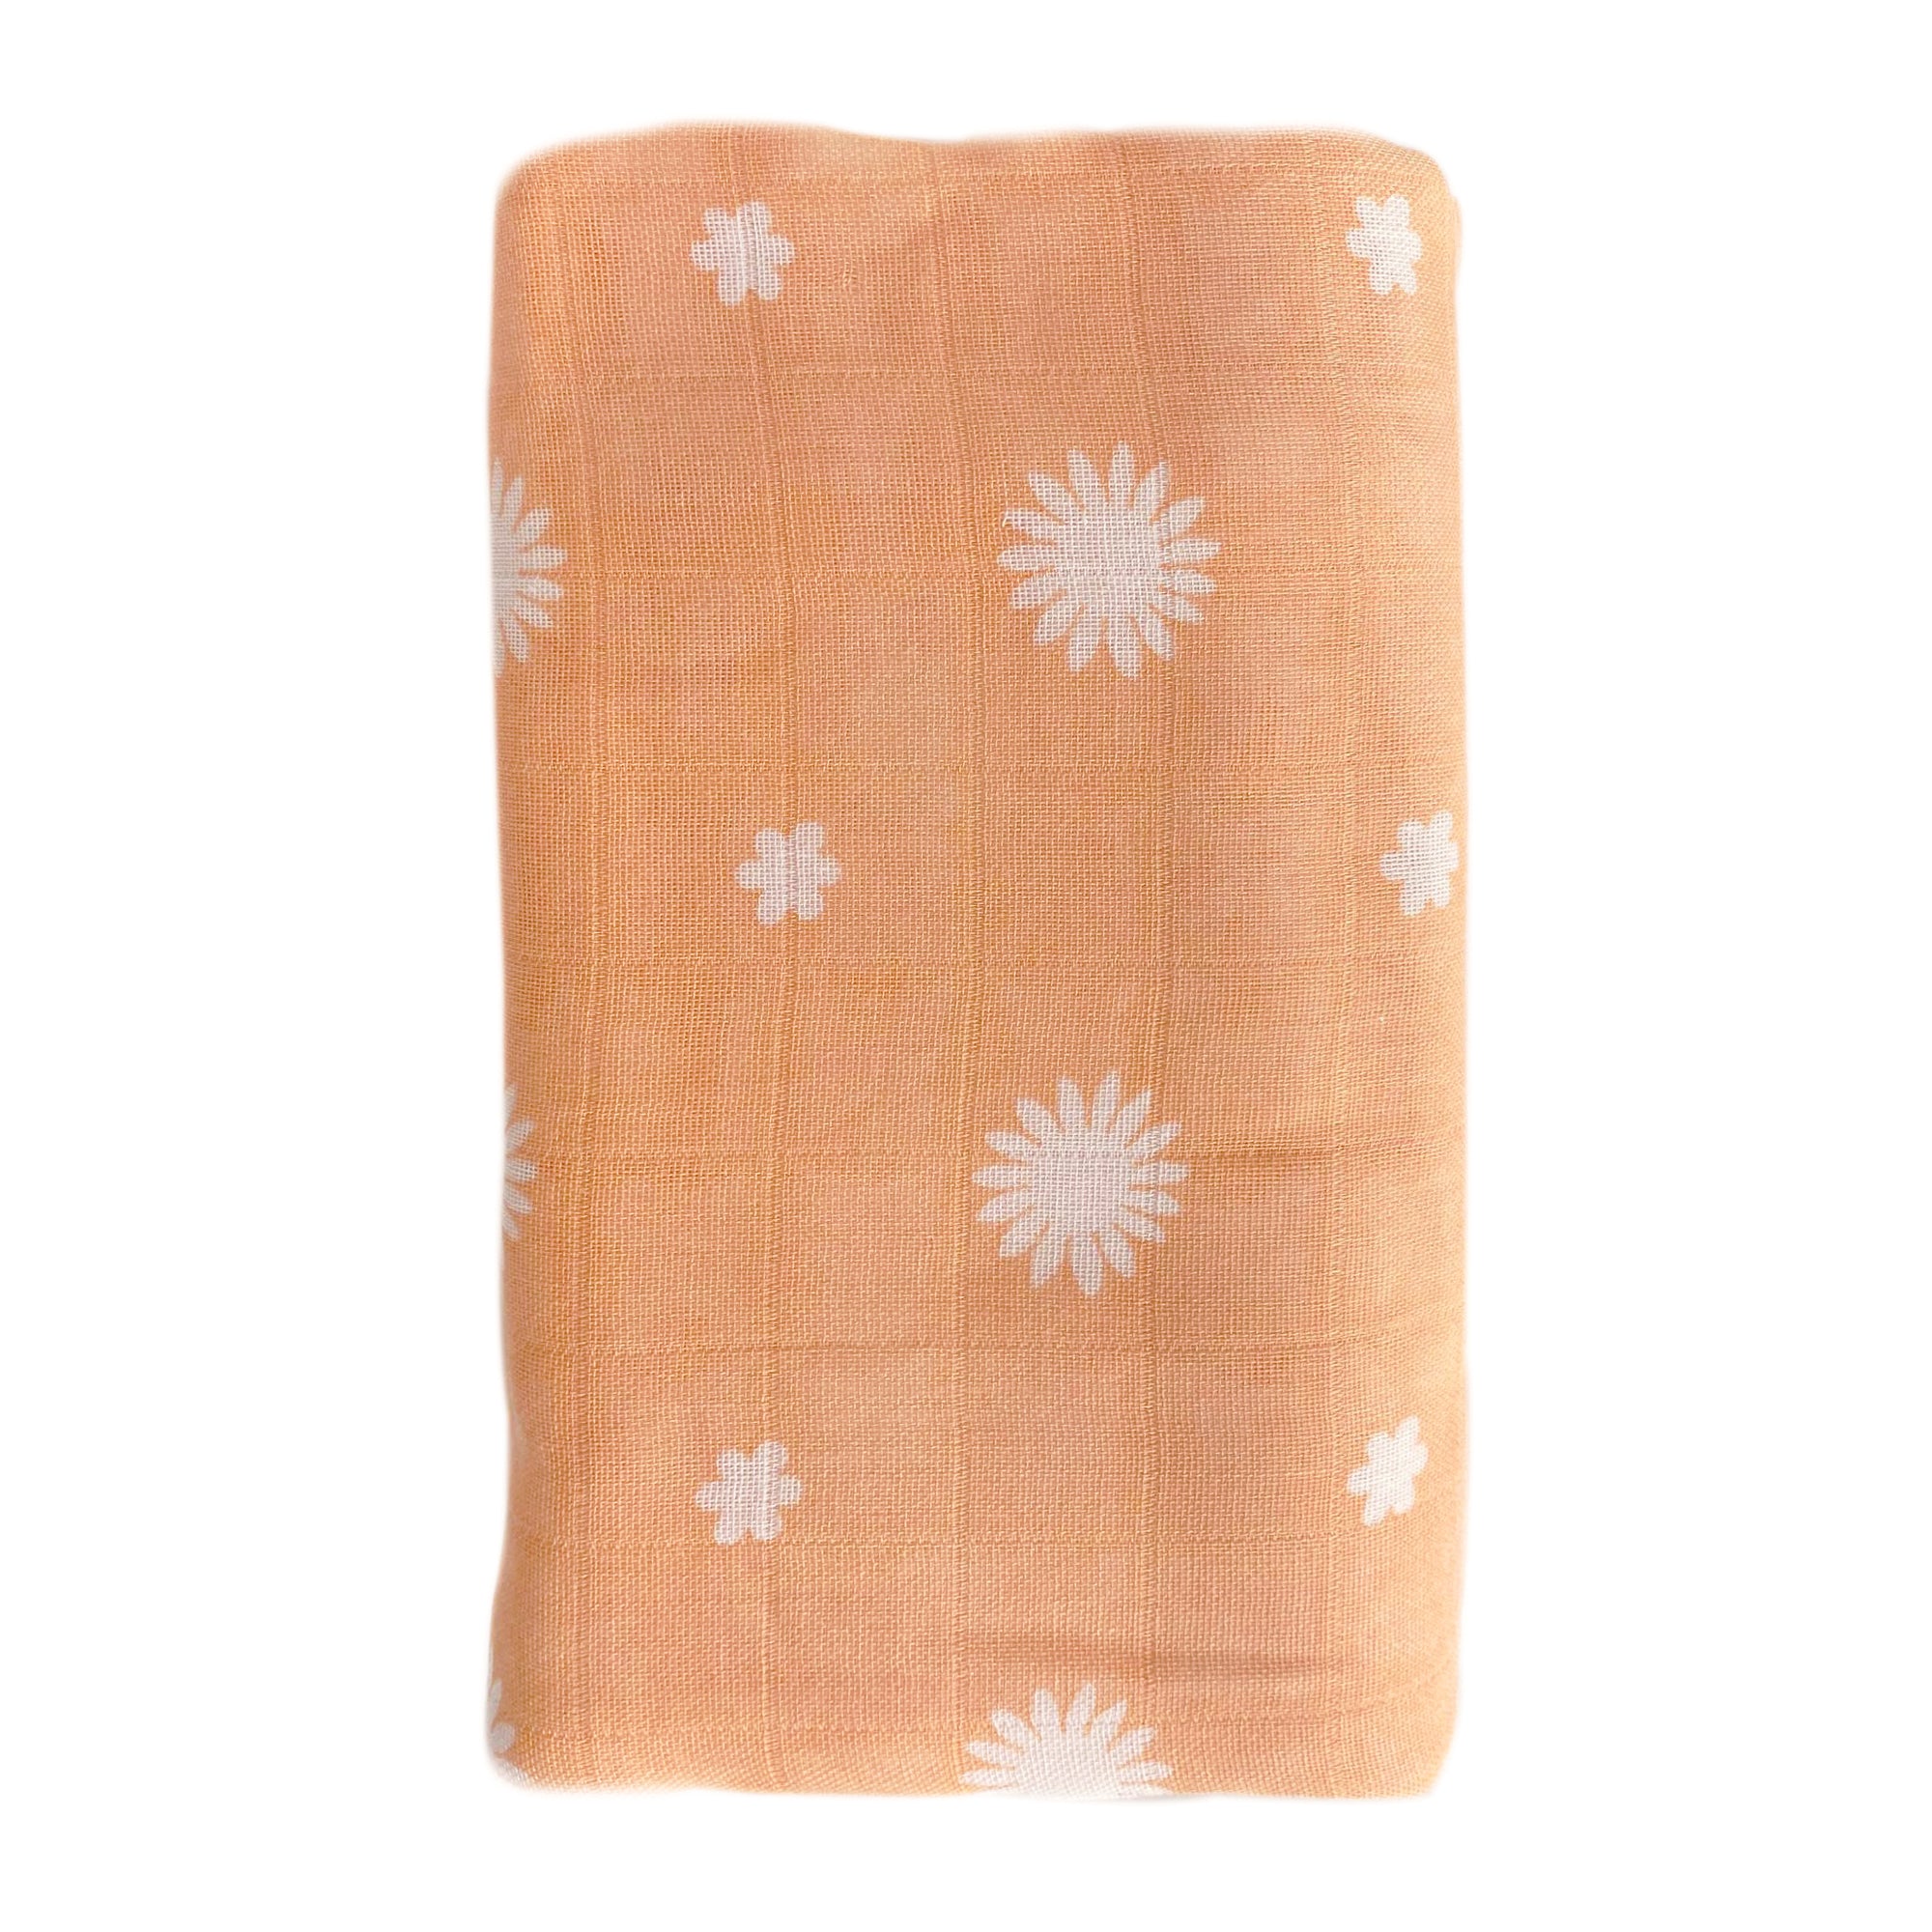 OB Designs Peach Muslin Security Blanket - Daisy Print